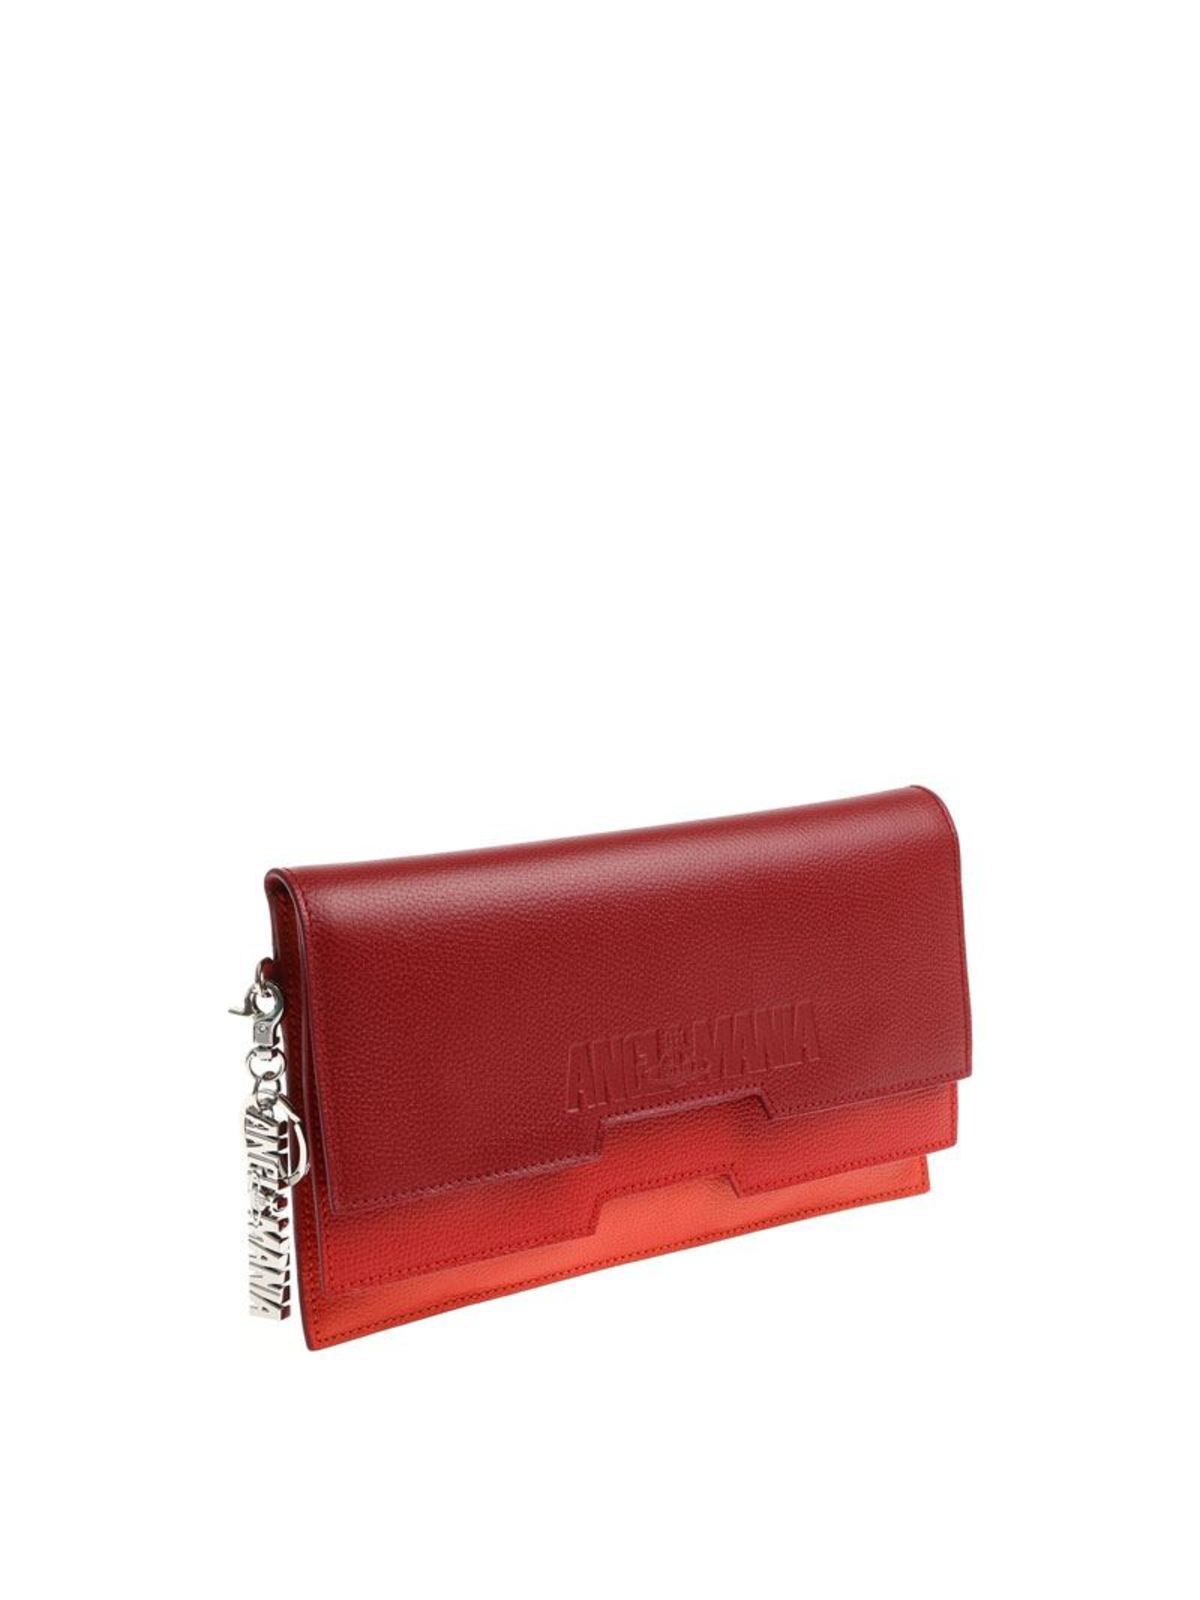 Shop Vivienne Westwood Anglomania Bolso Clutch - Rojo